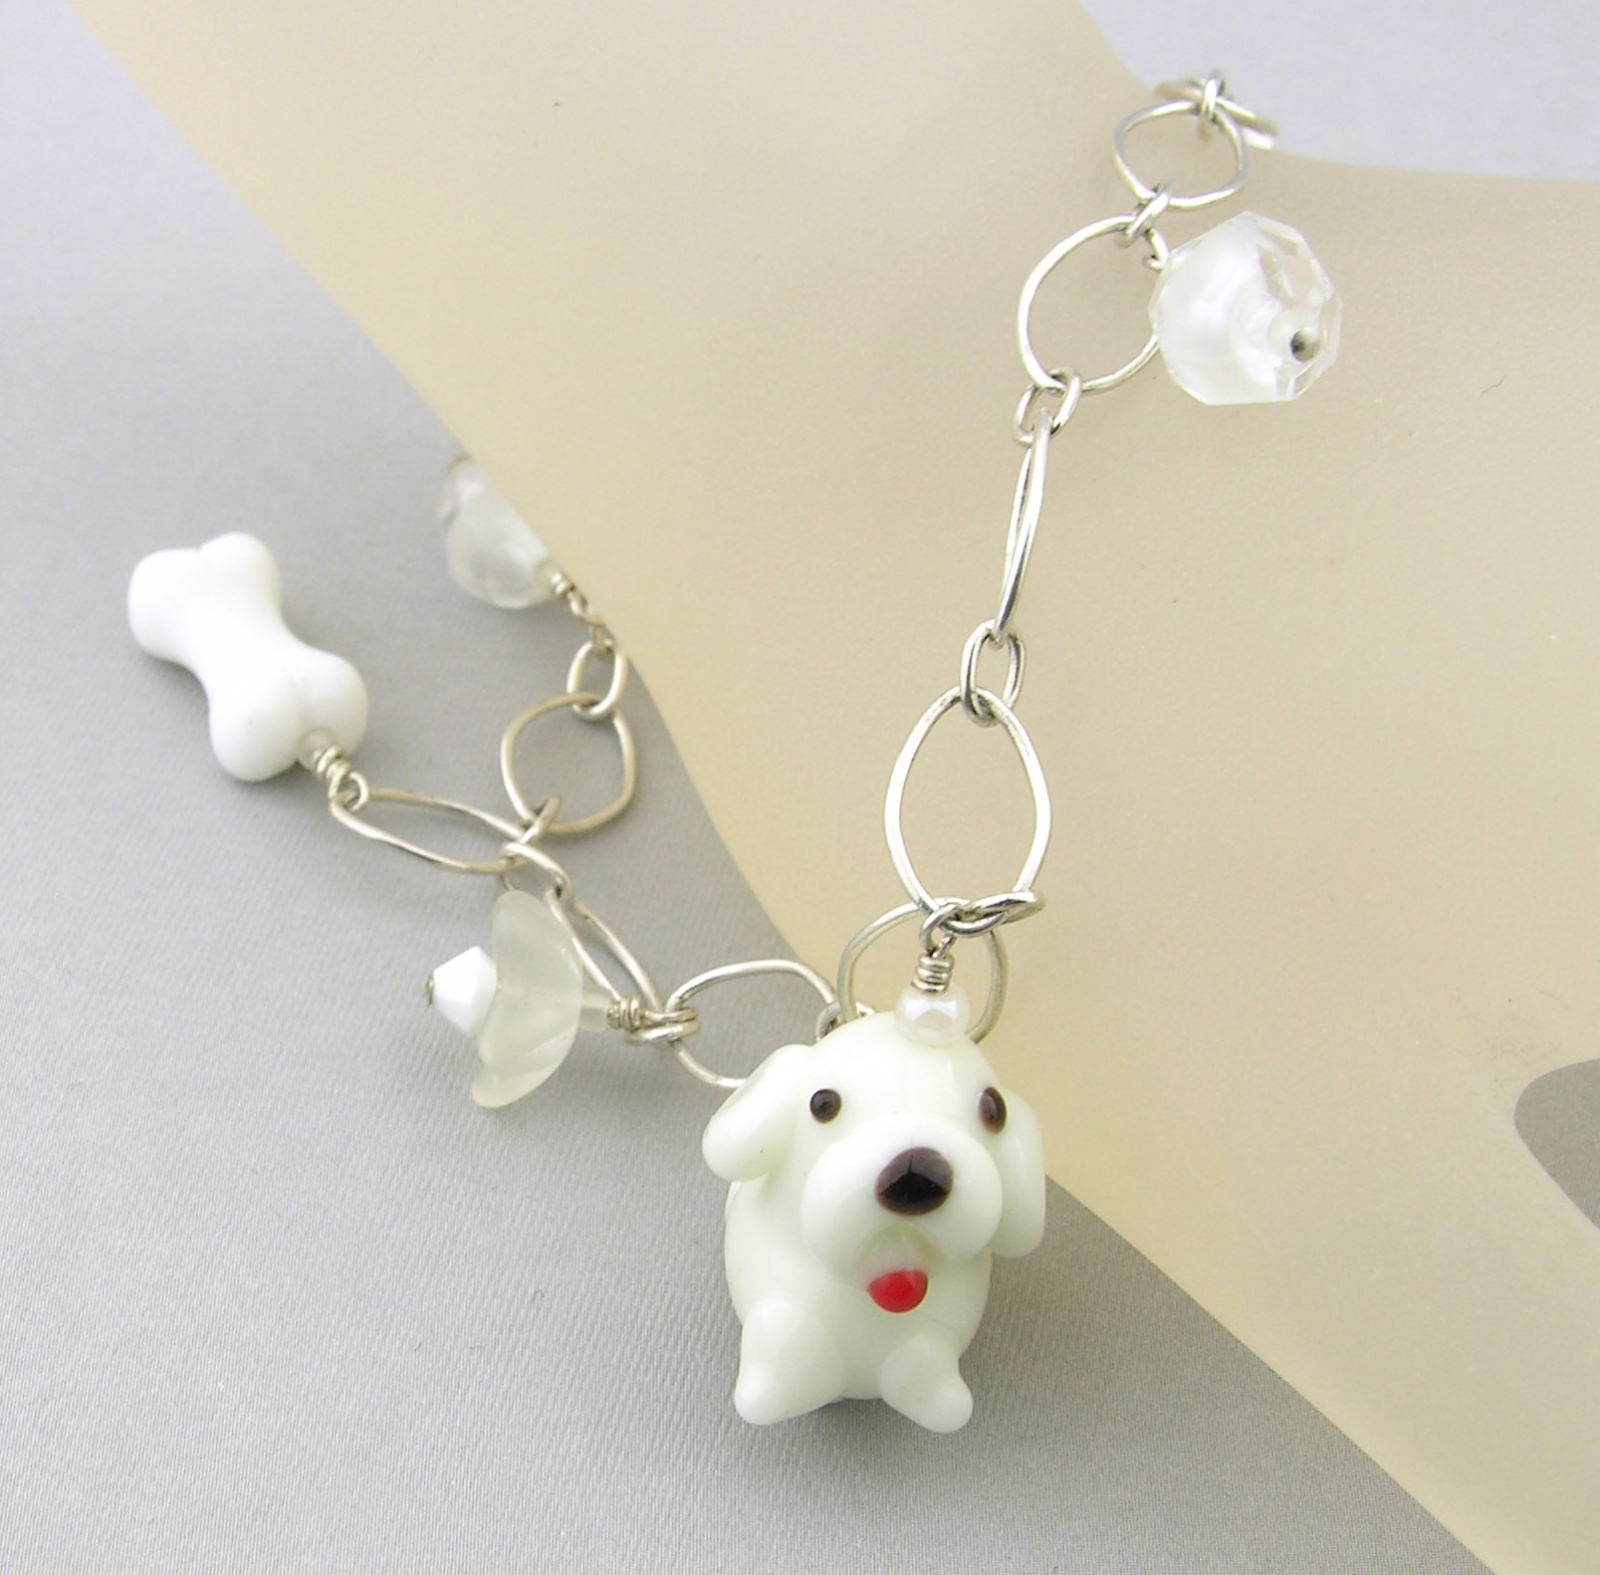 White Dog and Vintage Crystals Charm Bracelet - handmade artisan